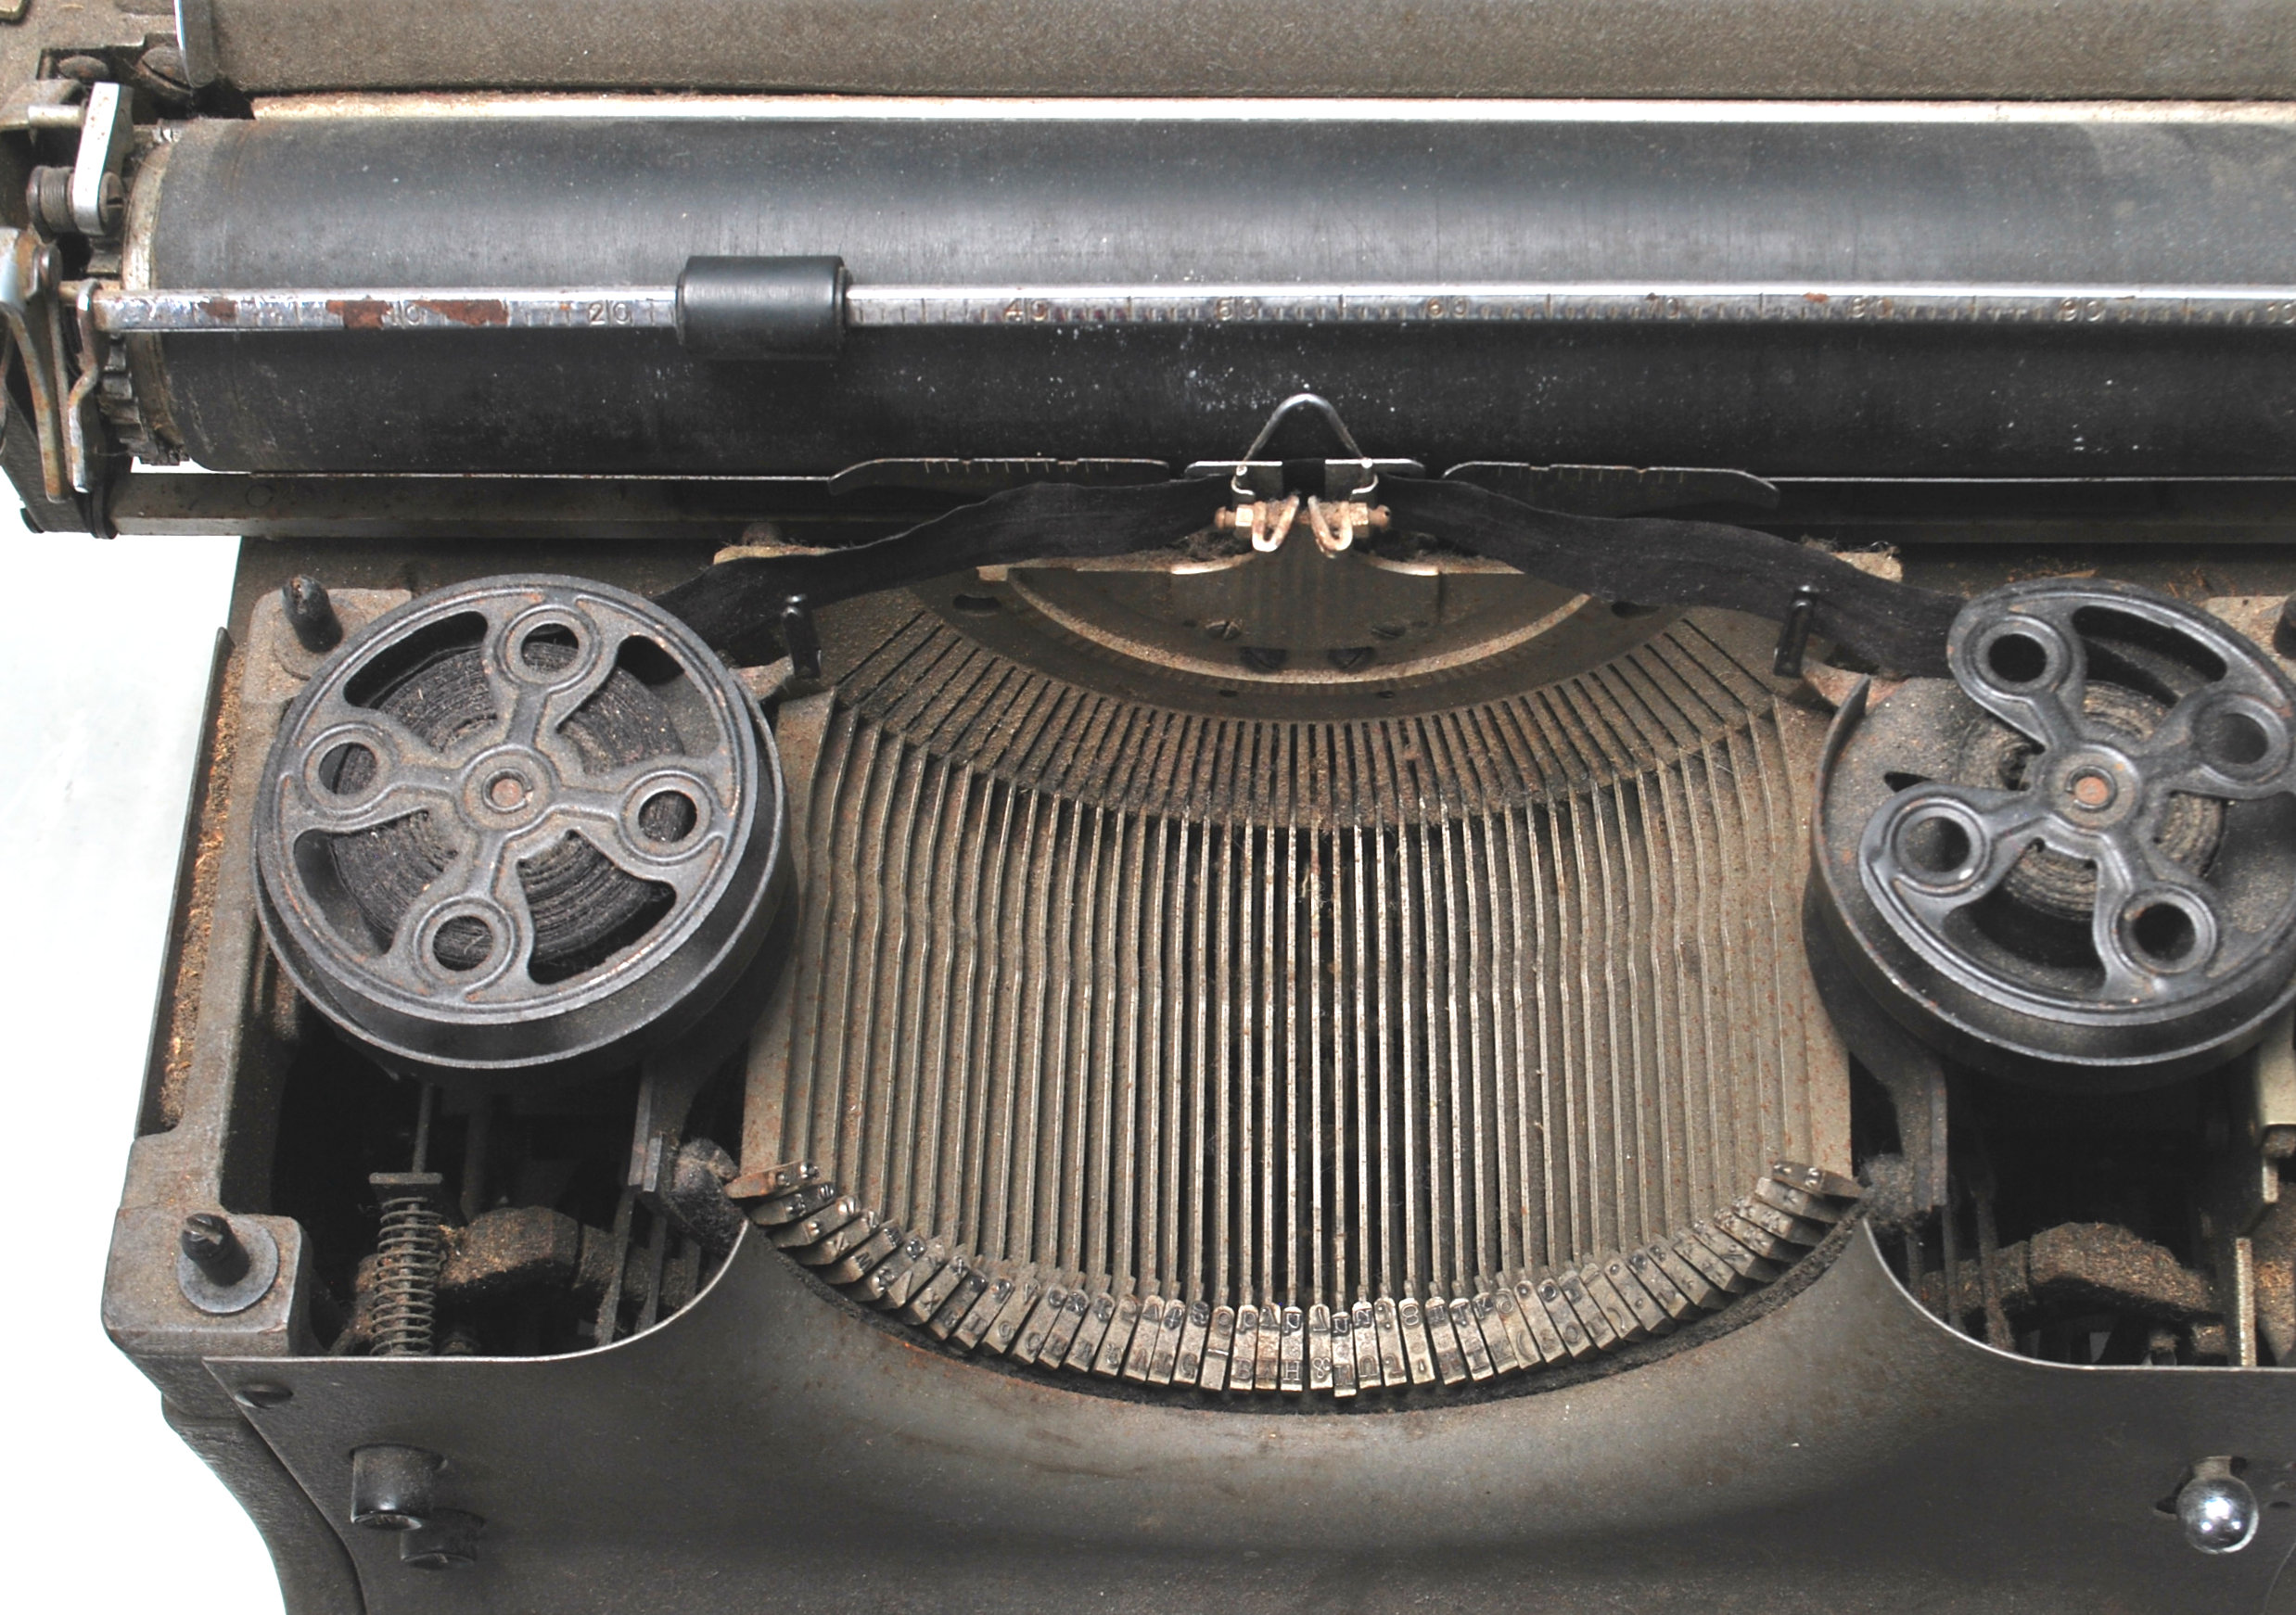 1950’S RETRO OLIVER NO 20 TYPEWRITER WITH BAKELITE KEYS - Image 3 of 7